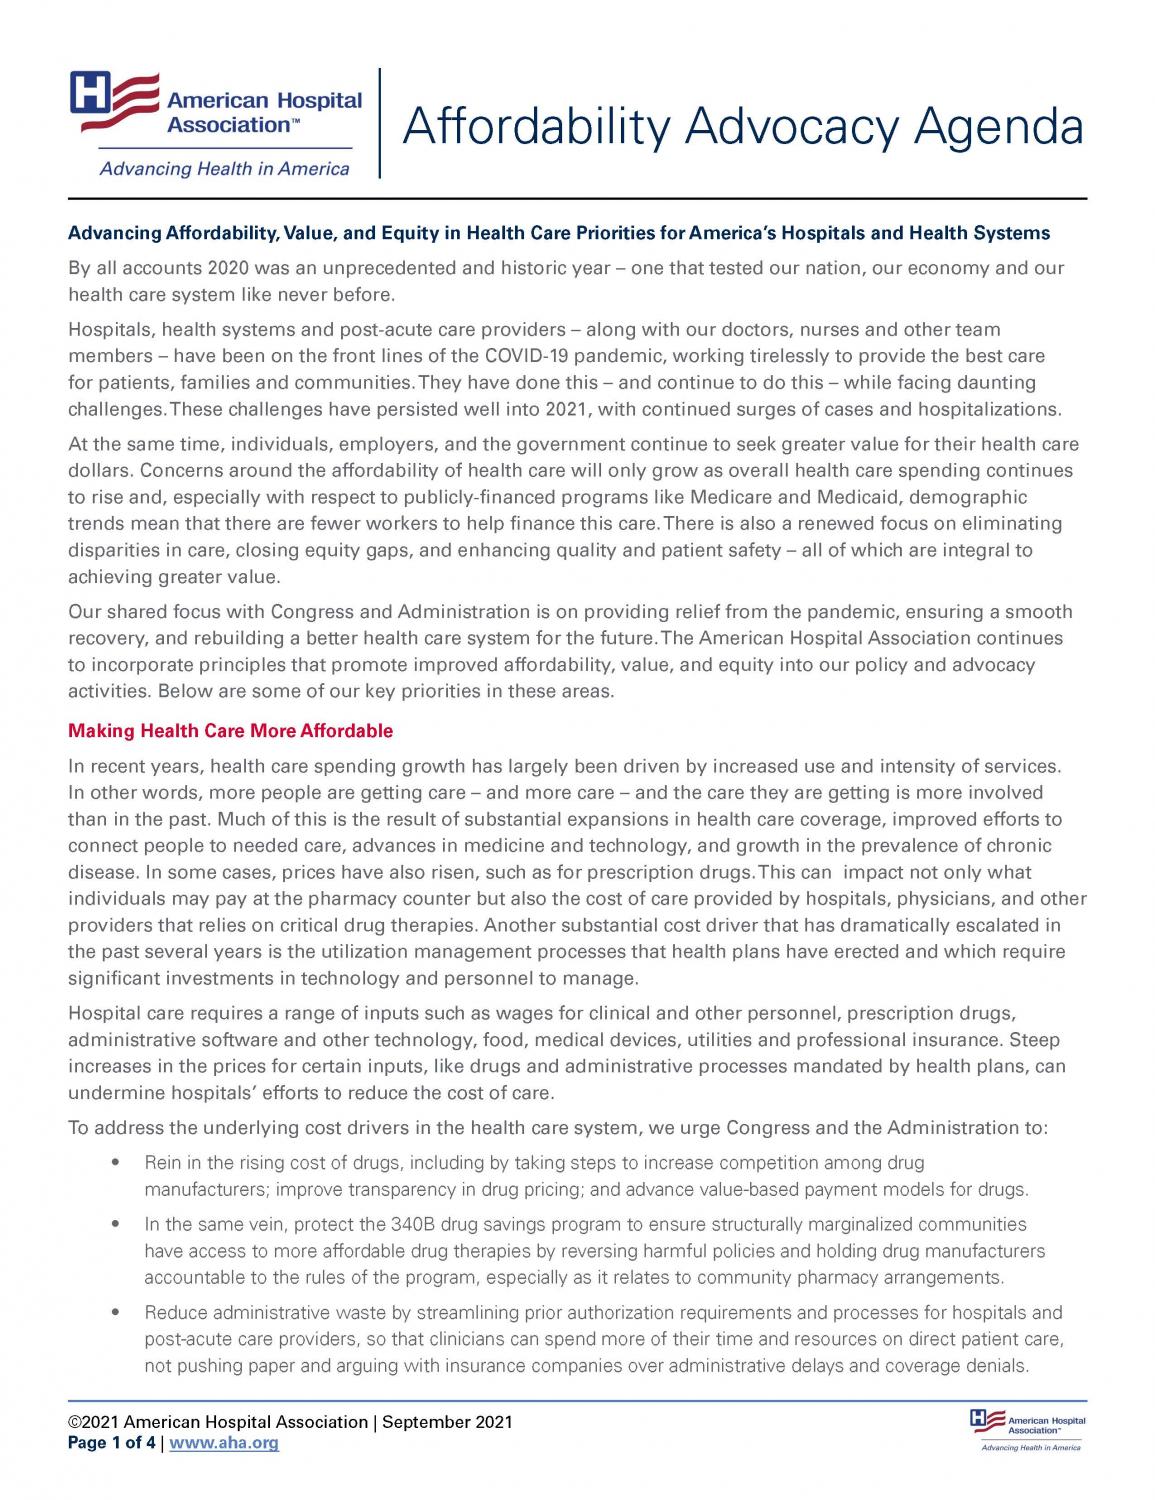 Affordability Advocacy Agenda page 1.